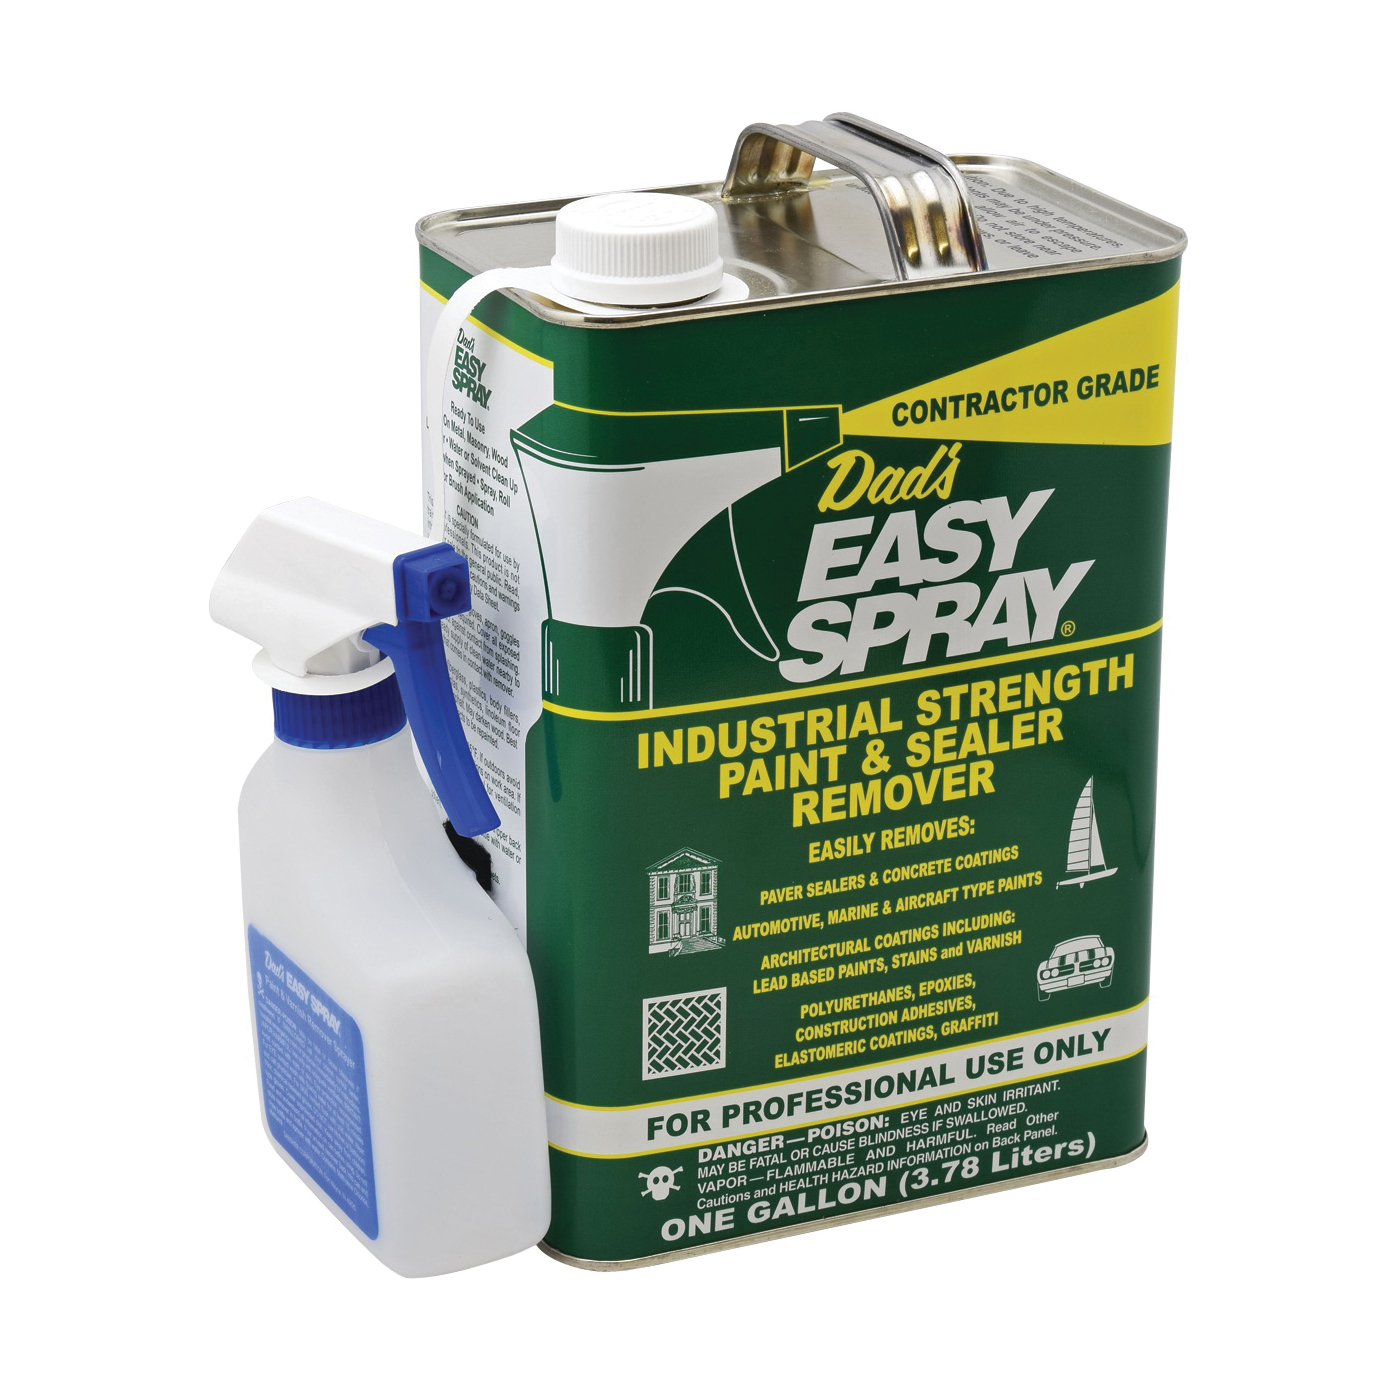 Dad's Easy Spray 21212 100044639 | Home Hardware Center